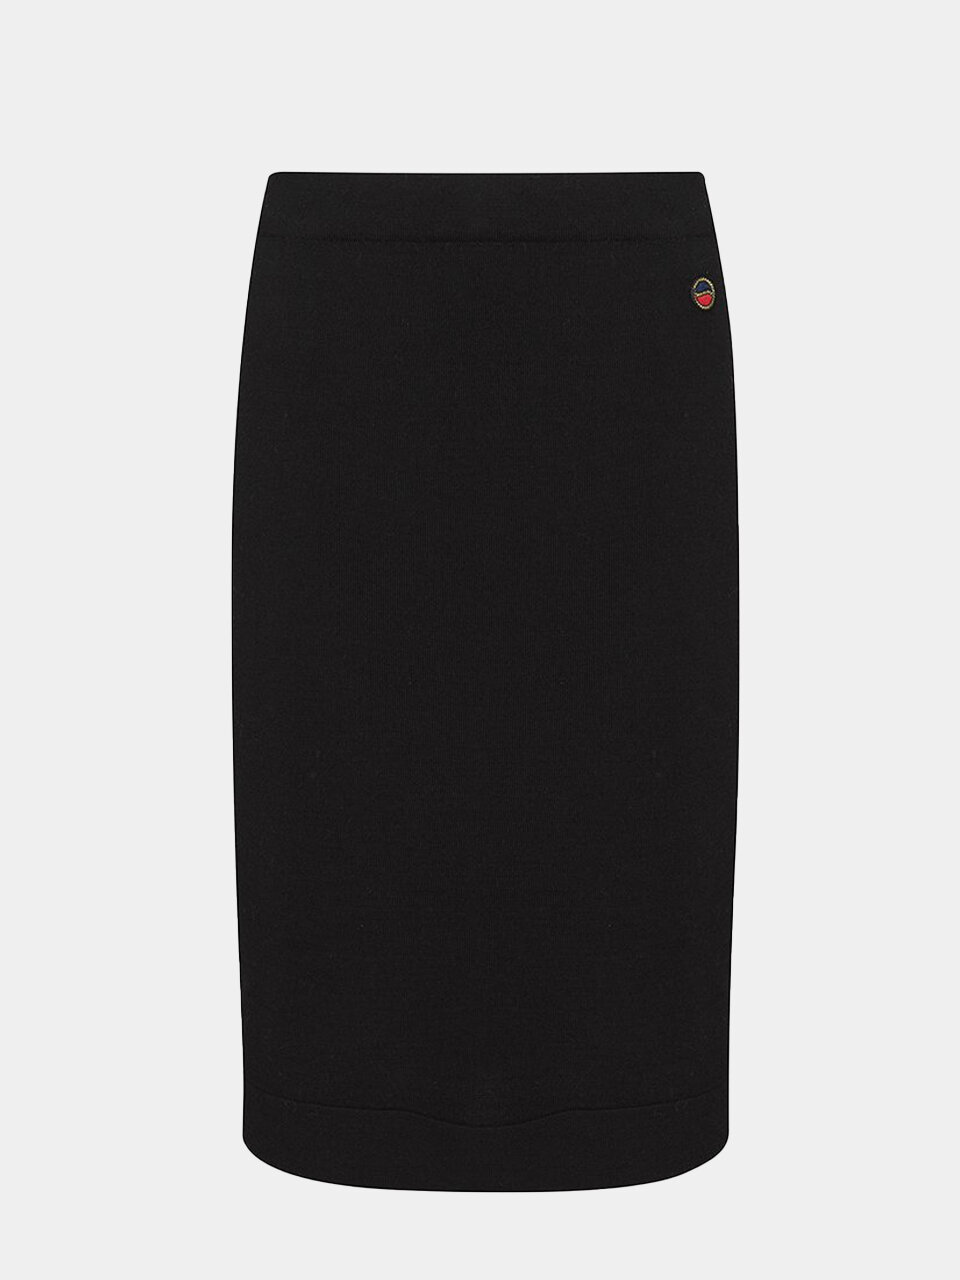 Busnel - Liberty Skirt